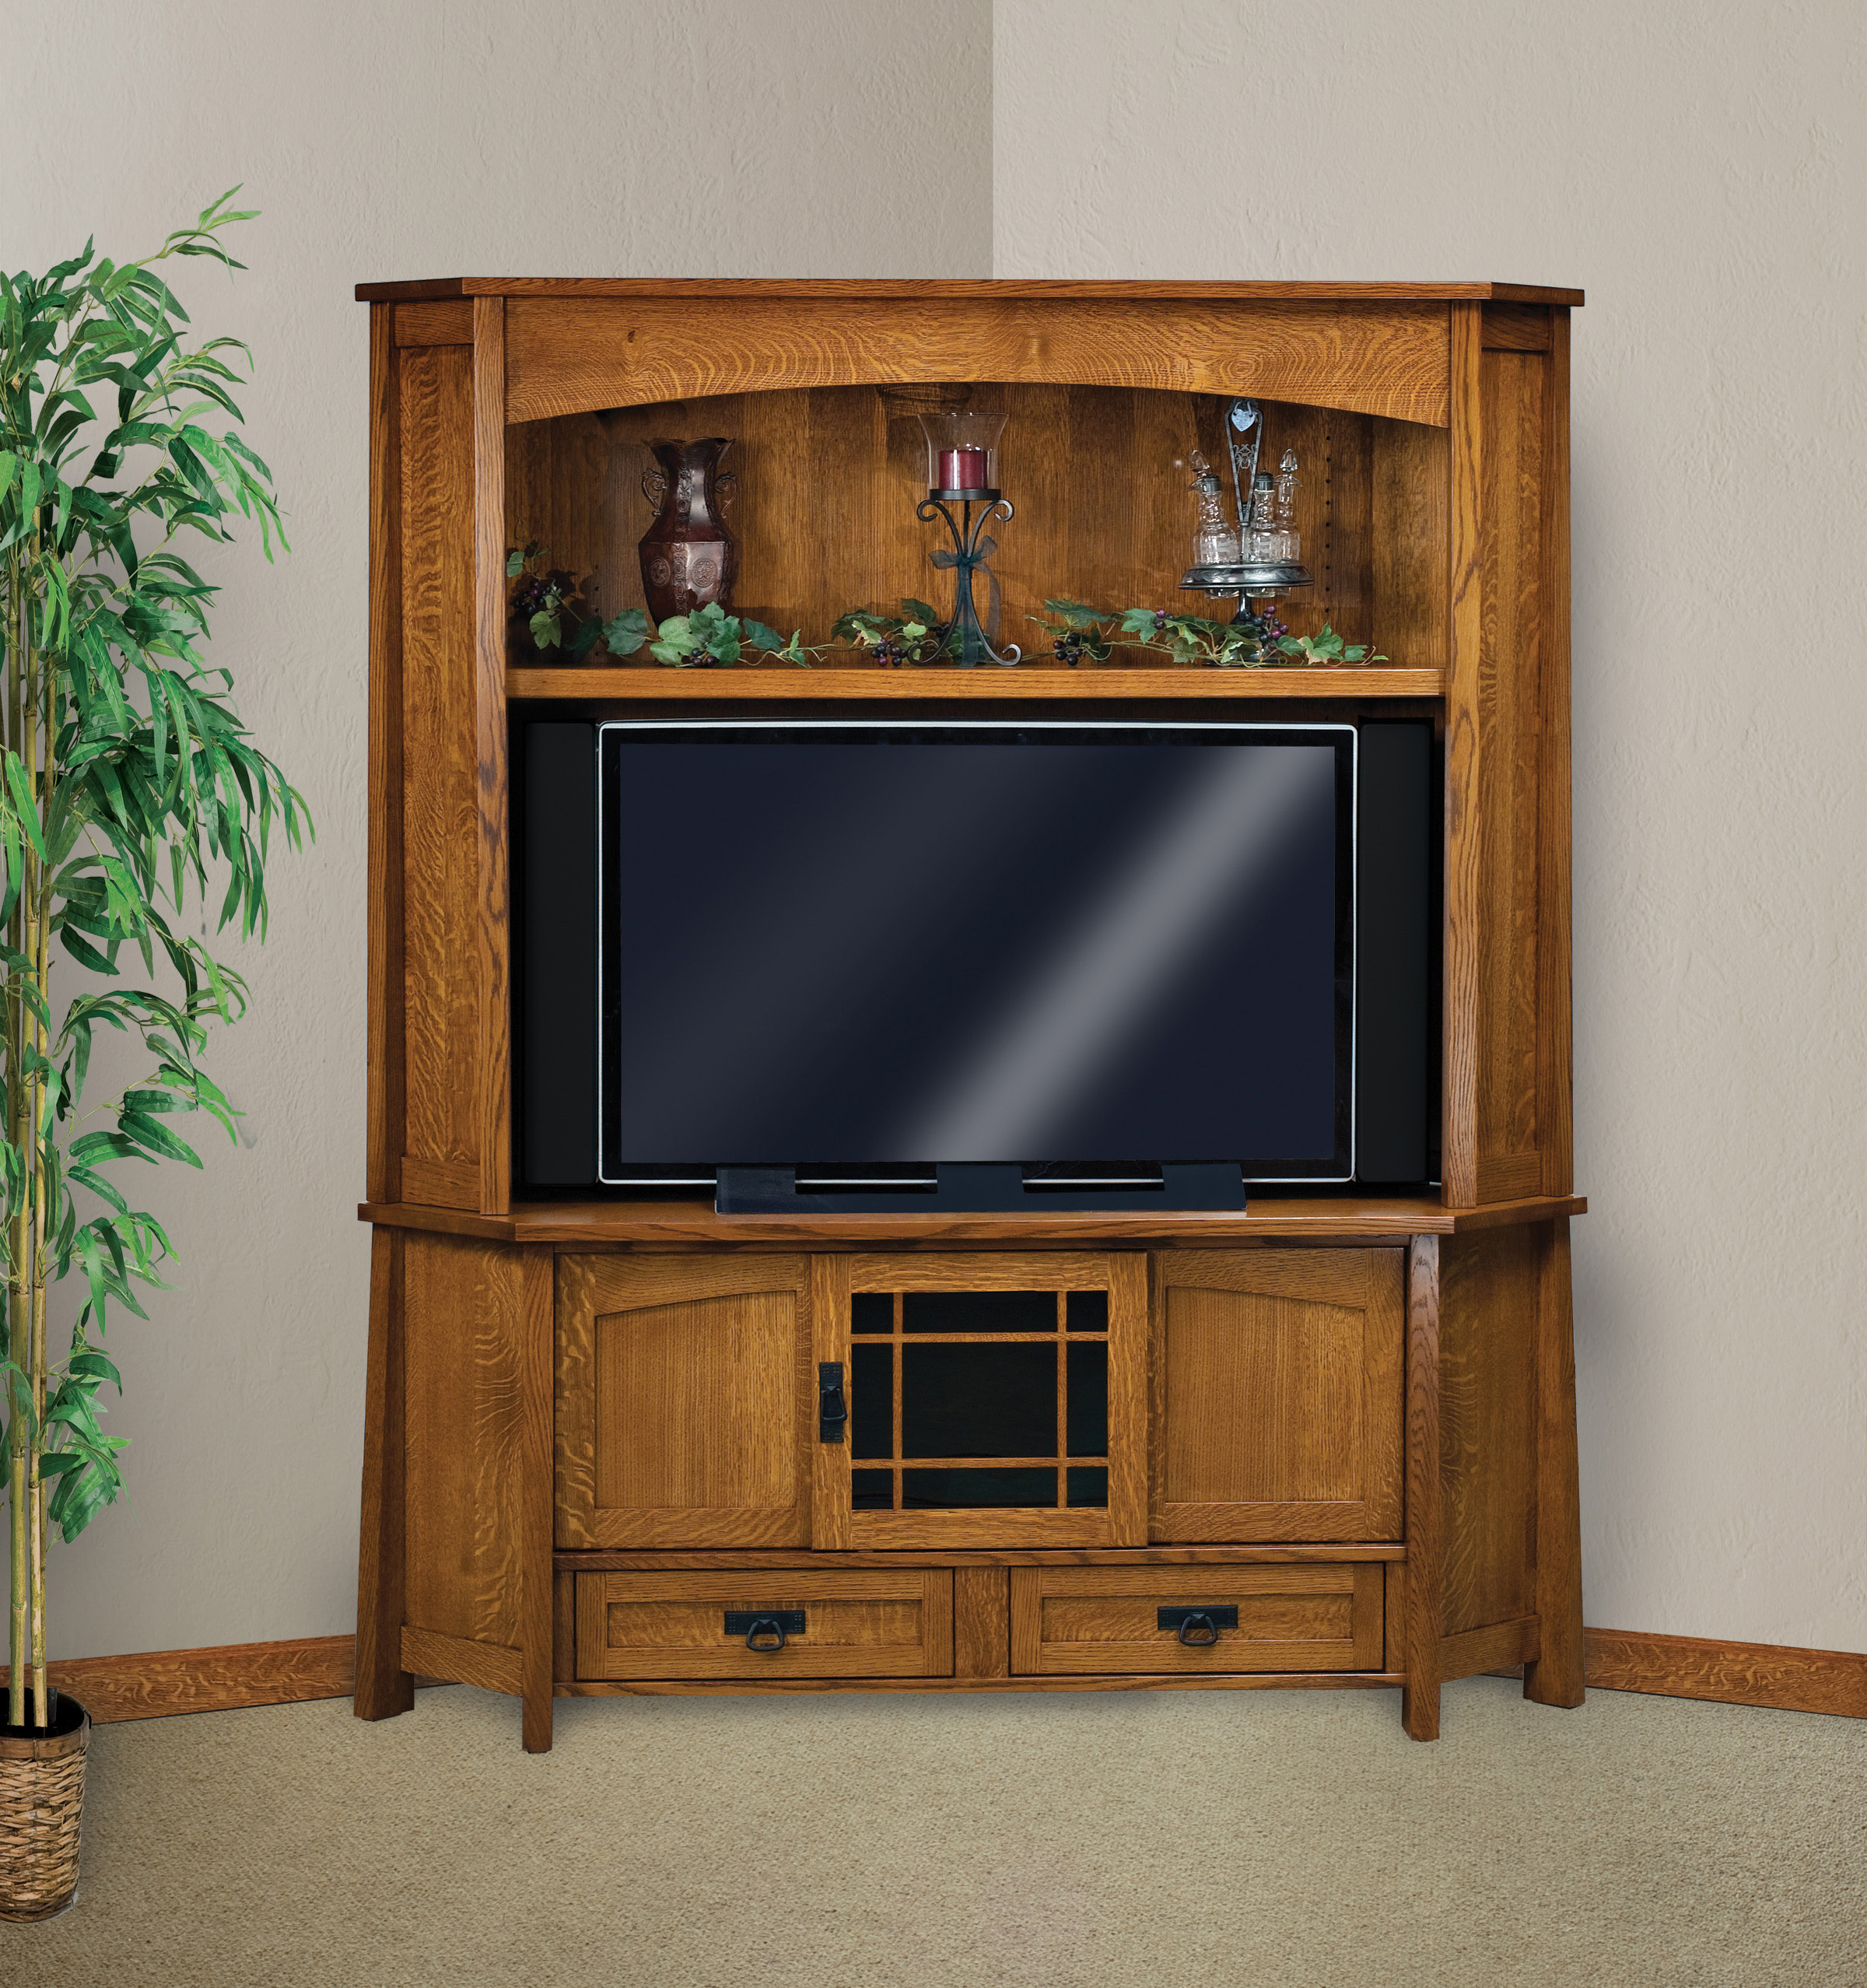 Amish corner entertainment center solid oak wood media hutch cabinet